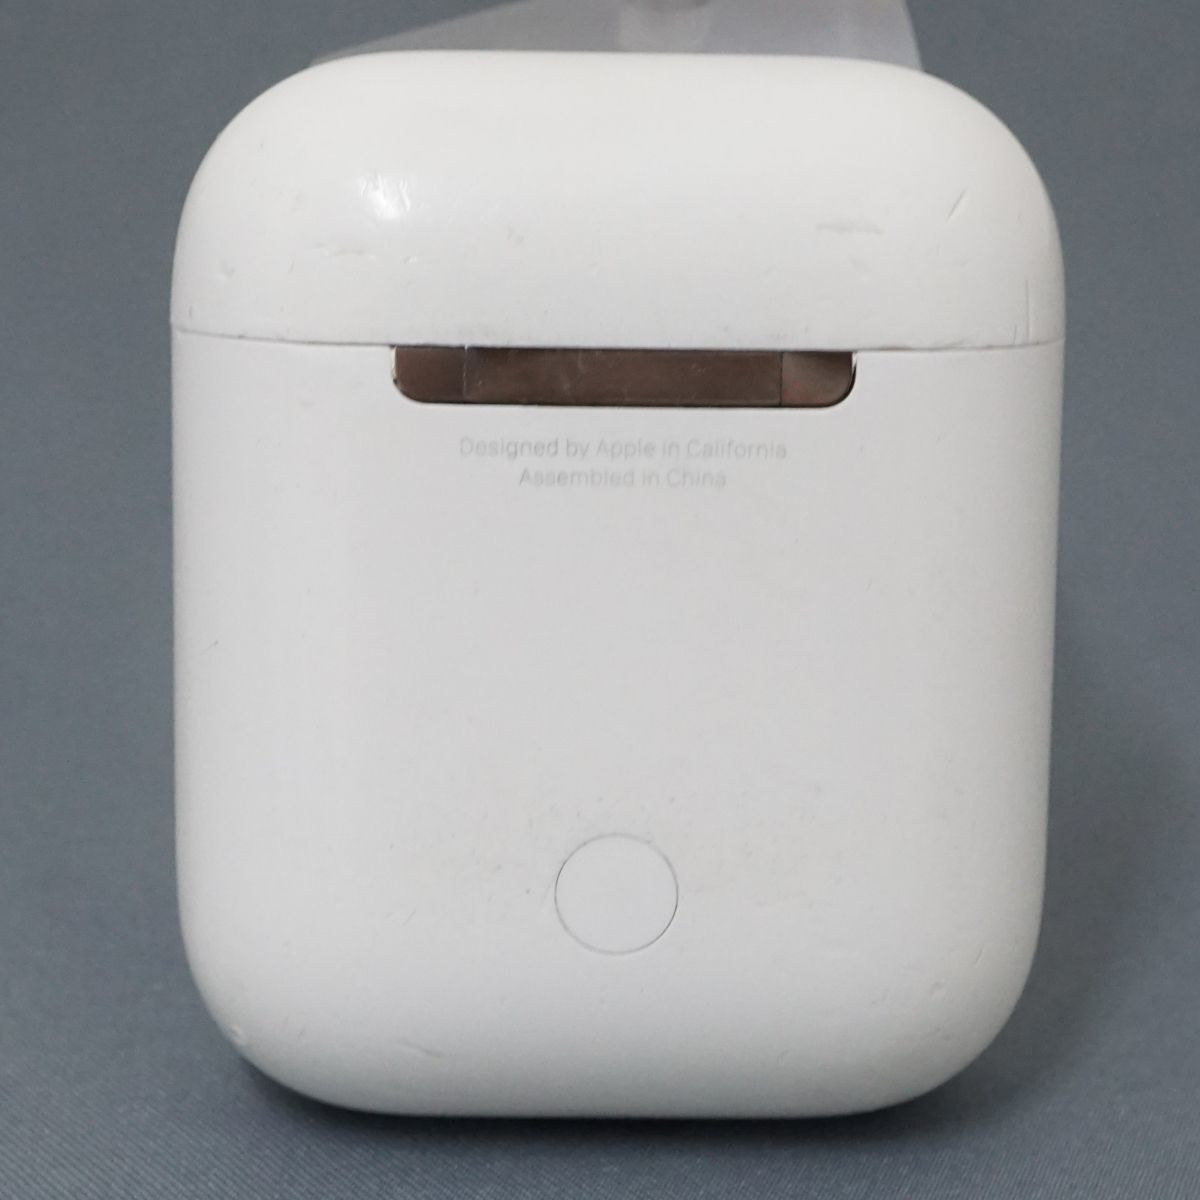 Apple AirPods エアーポッズ 充電ケースのみ 第一世代 USED品 Bluetooth対応 MMEF2J/A A1602 正規品 完動品 即日発送 T V8014_画像4